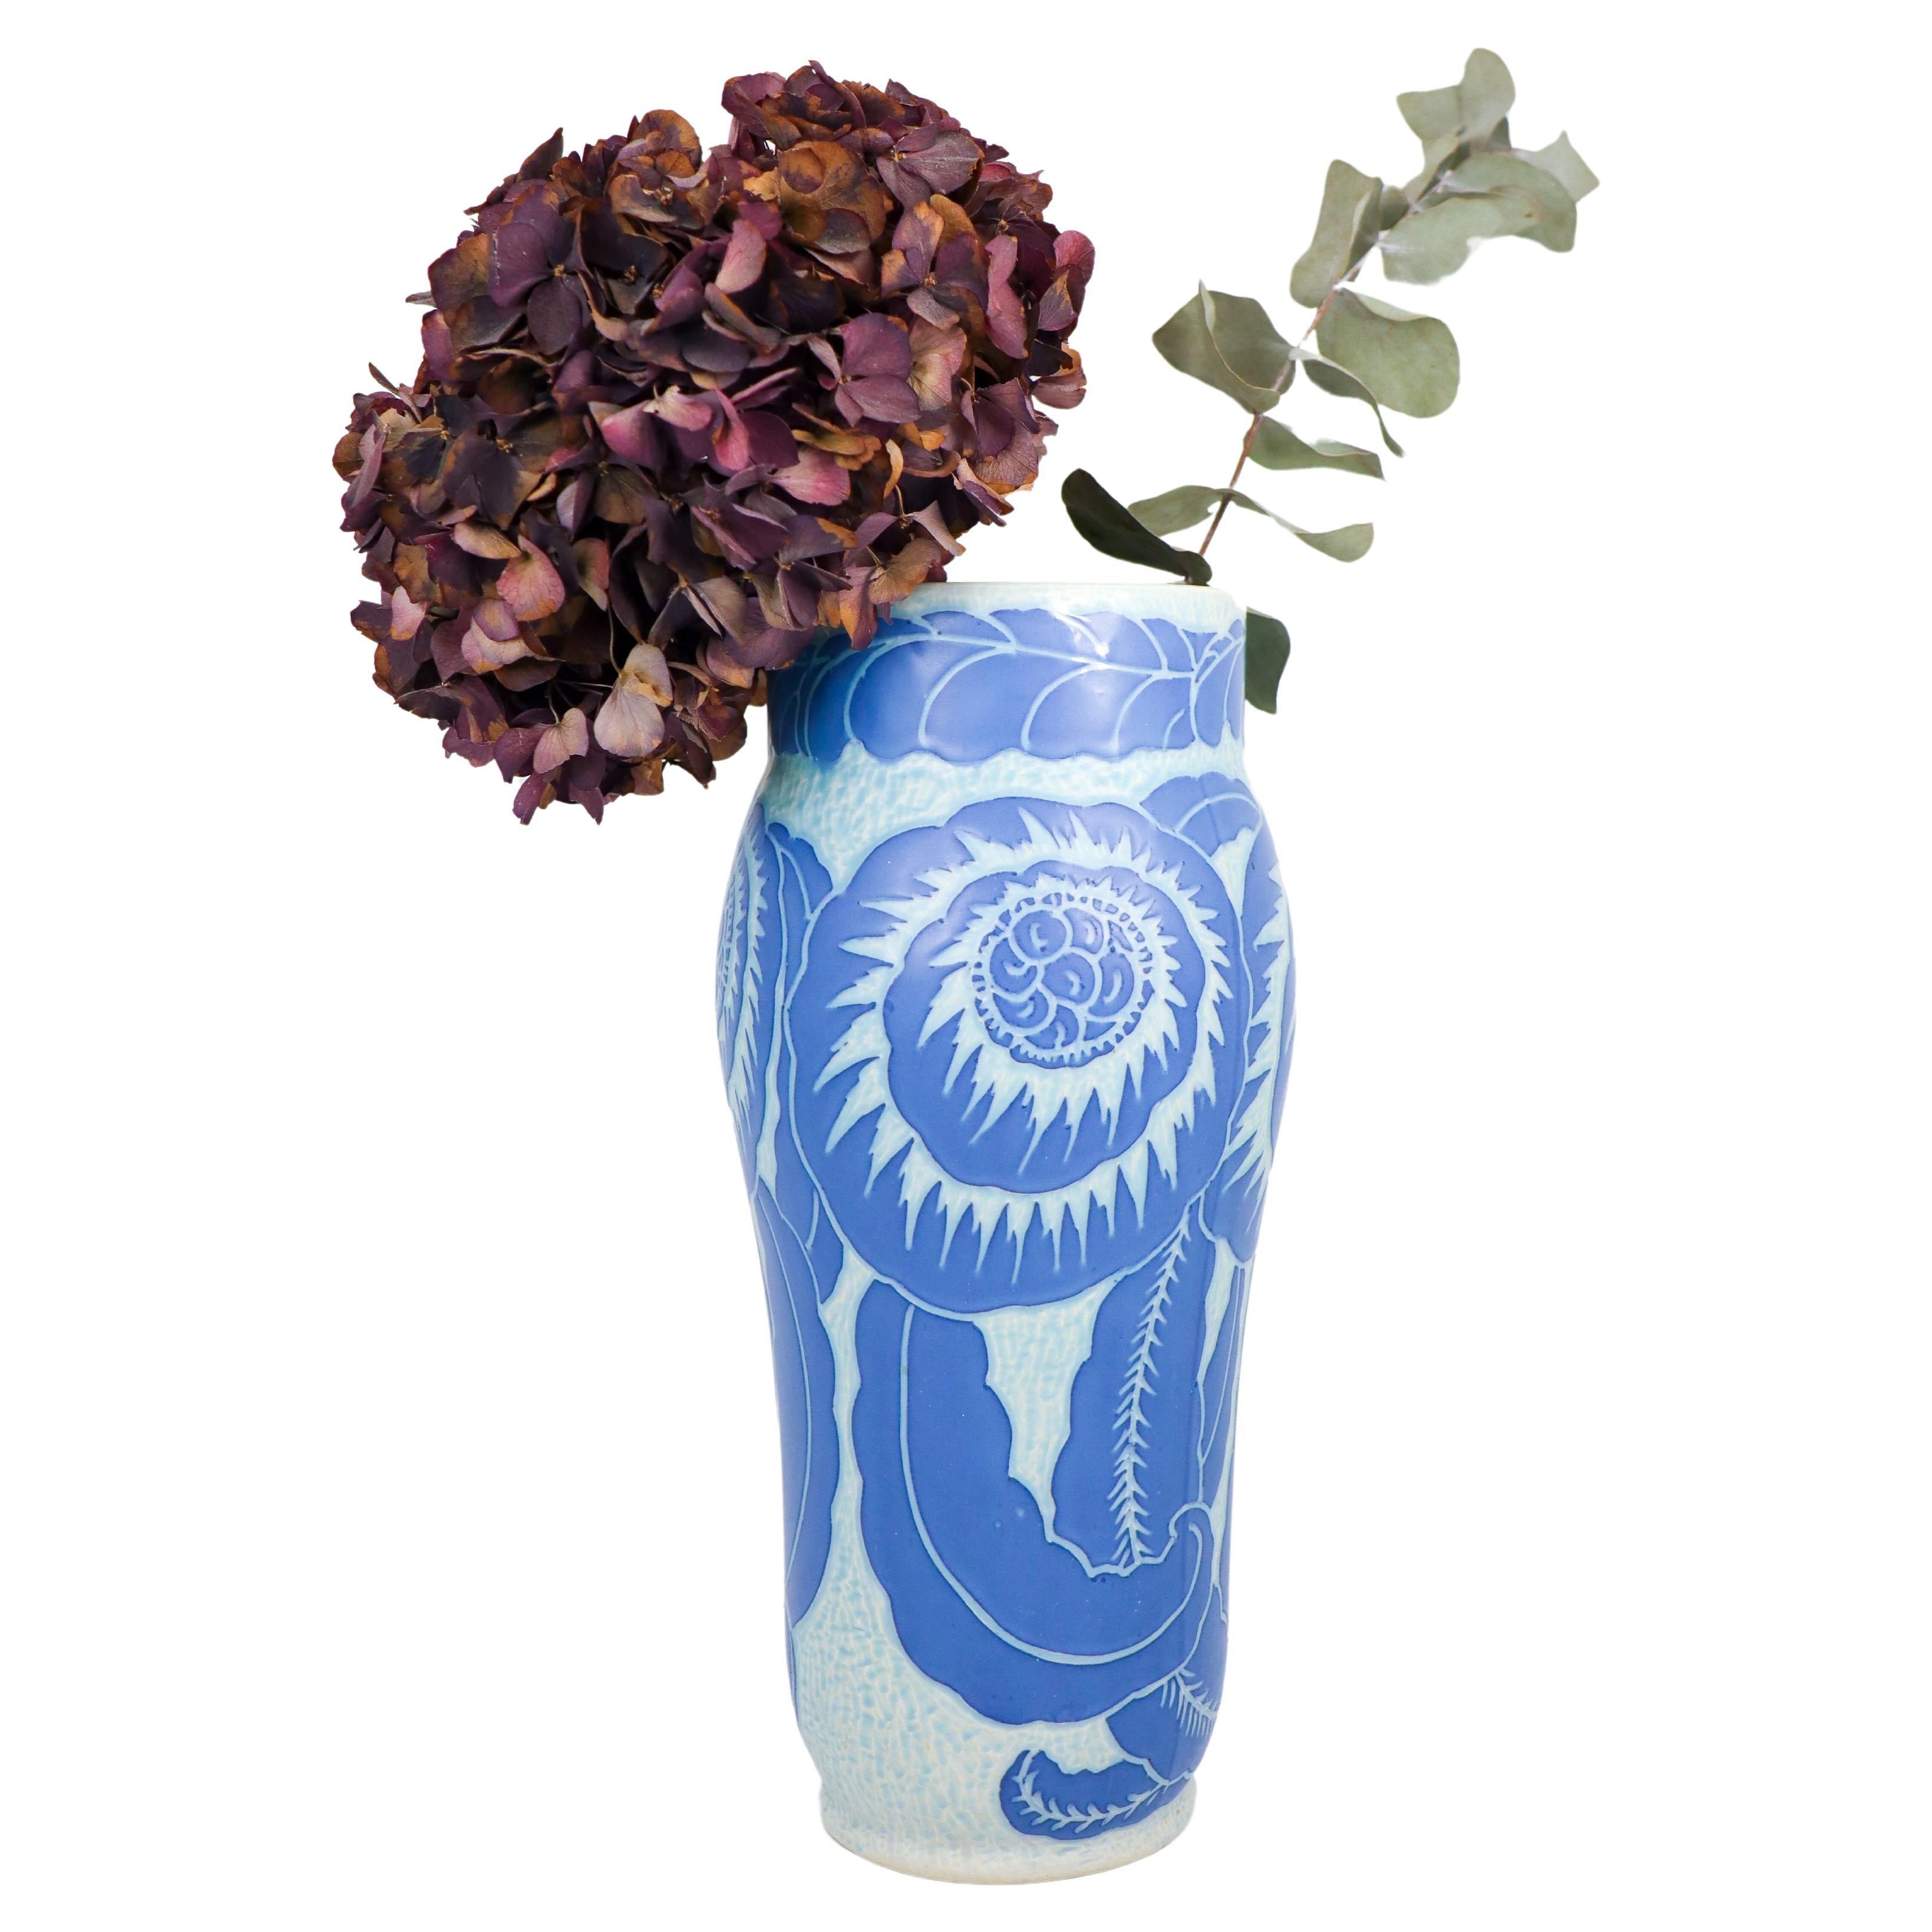 Art Nouveau Vase Ceramics, Floral Turquoise & Blue Josef Ekberg Sgrafitto 1918